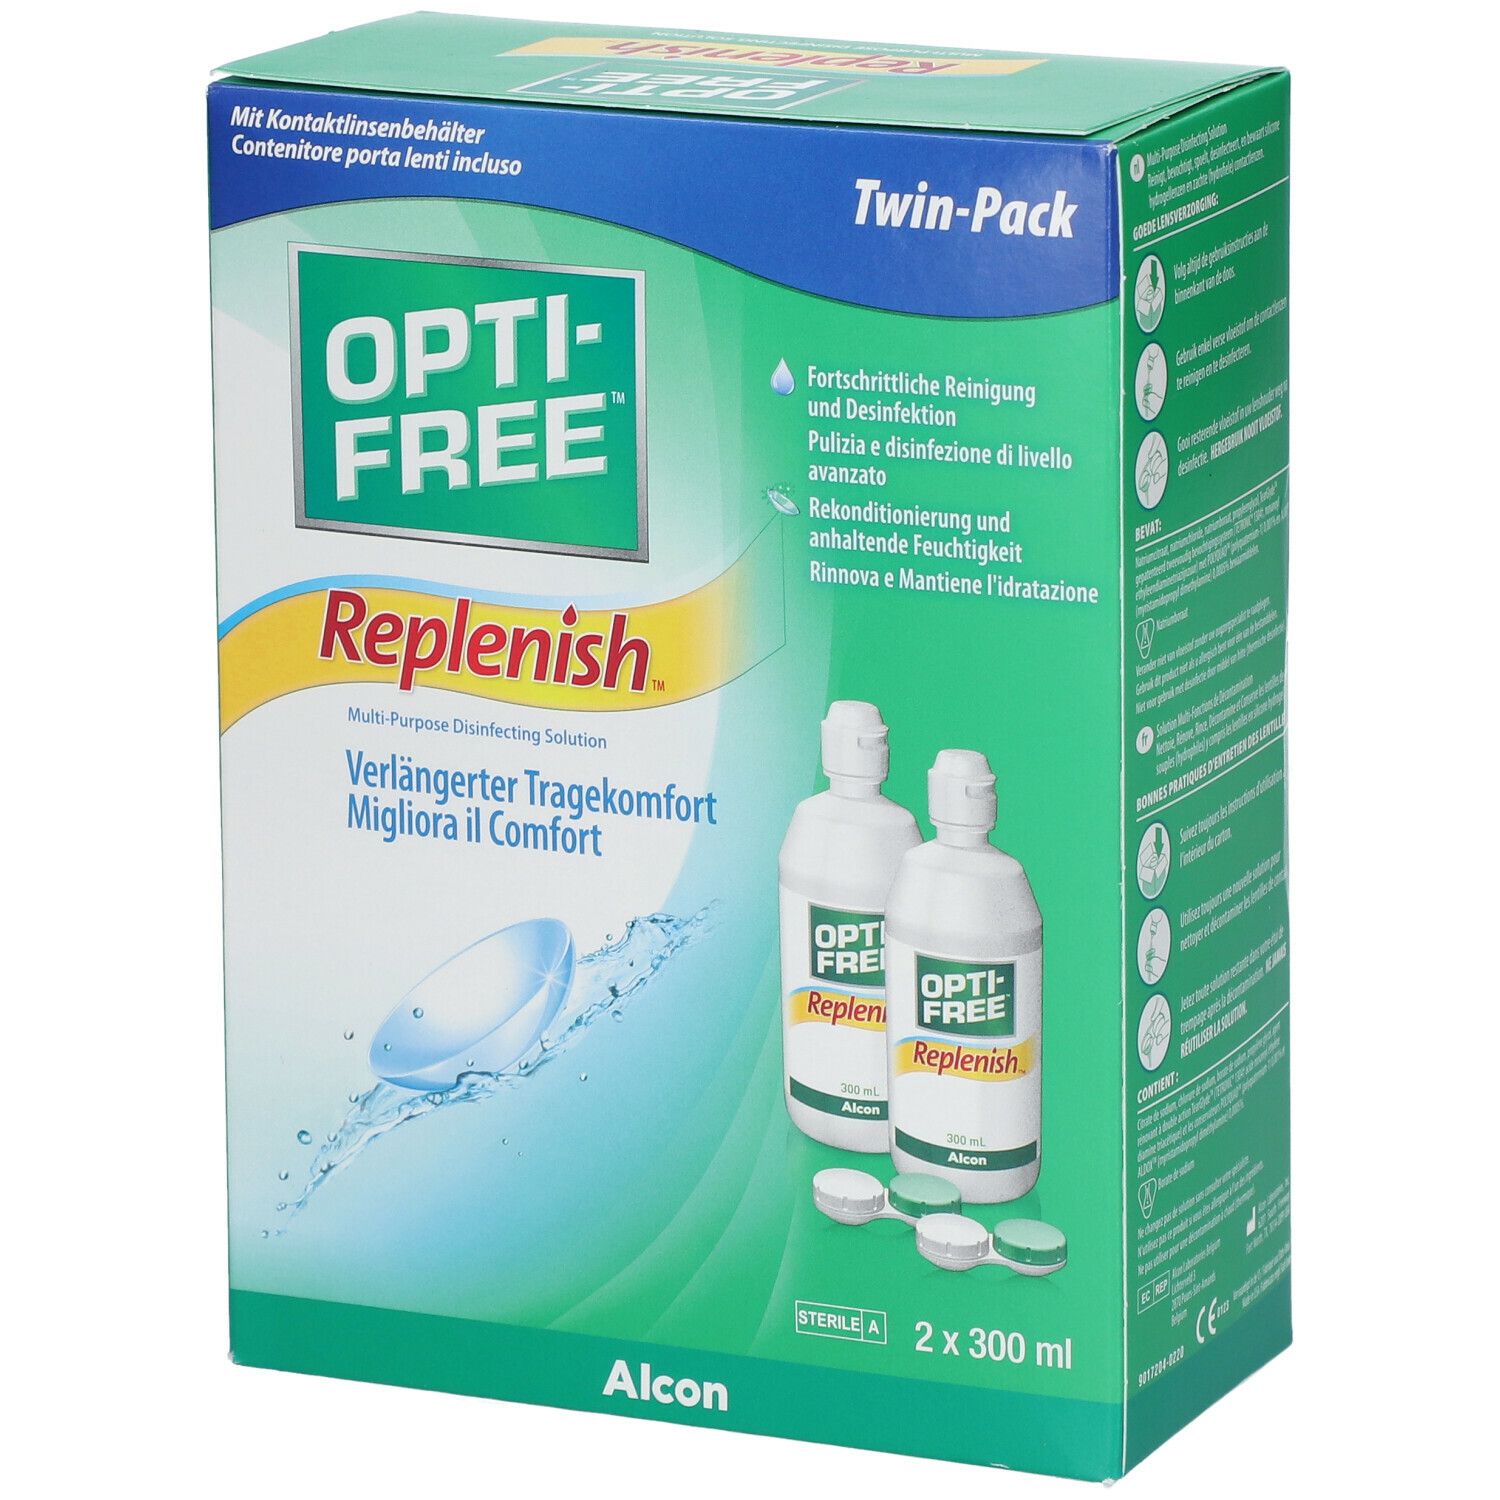 Image of OPTI-FREE® RepleniSH®